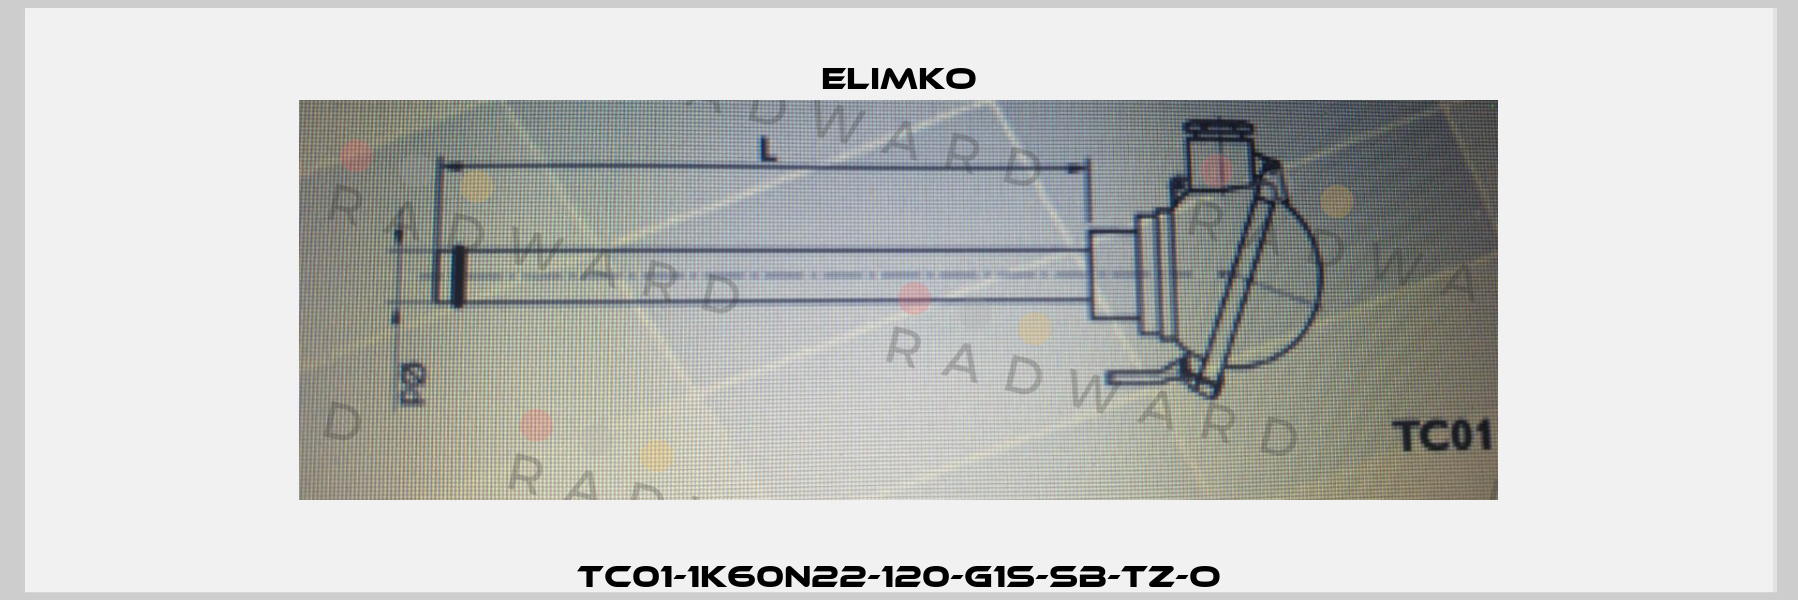 TC01-1K60N22-120-G1S-SB-TZ-O Elimko